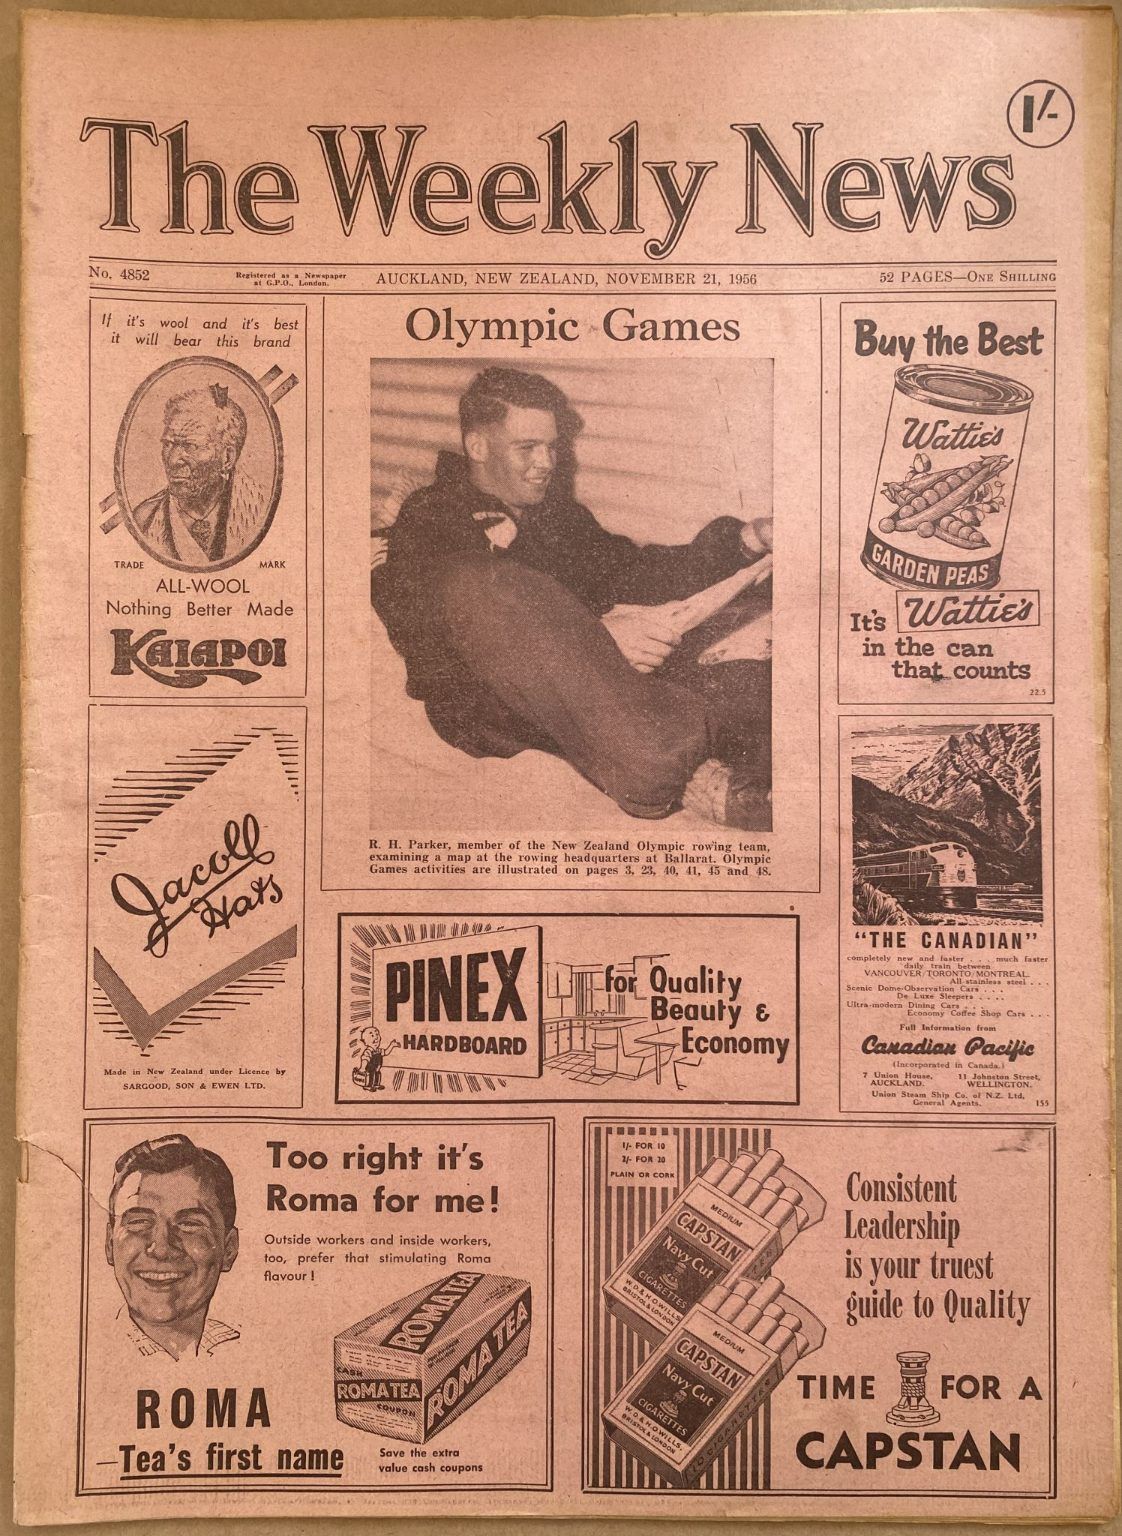 OLD NEWSPAPER: The Weekly News - No. 4852, 21 November 1956